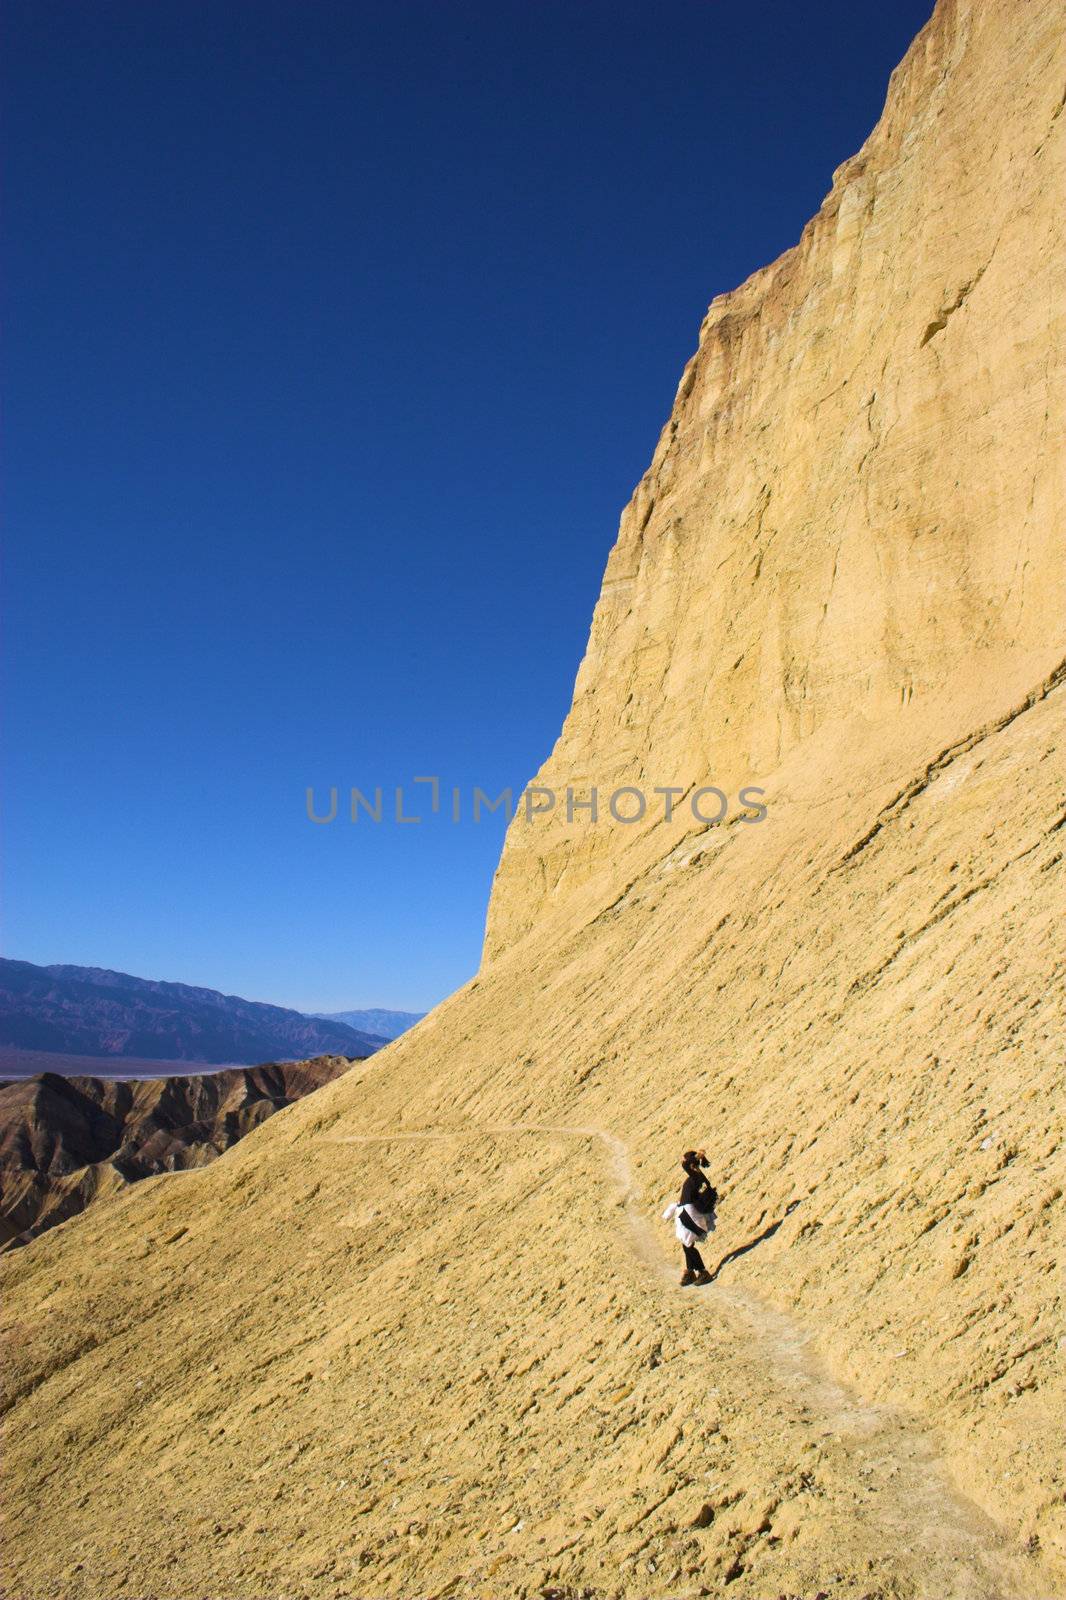 Desertscapes of Death Valley by georgeburba